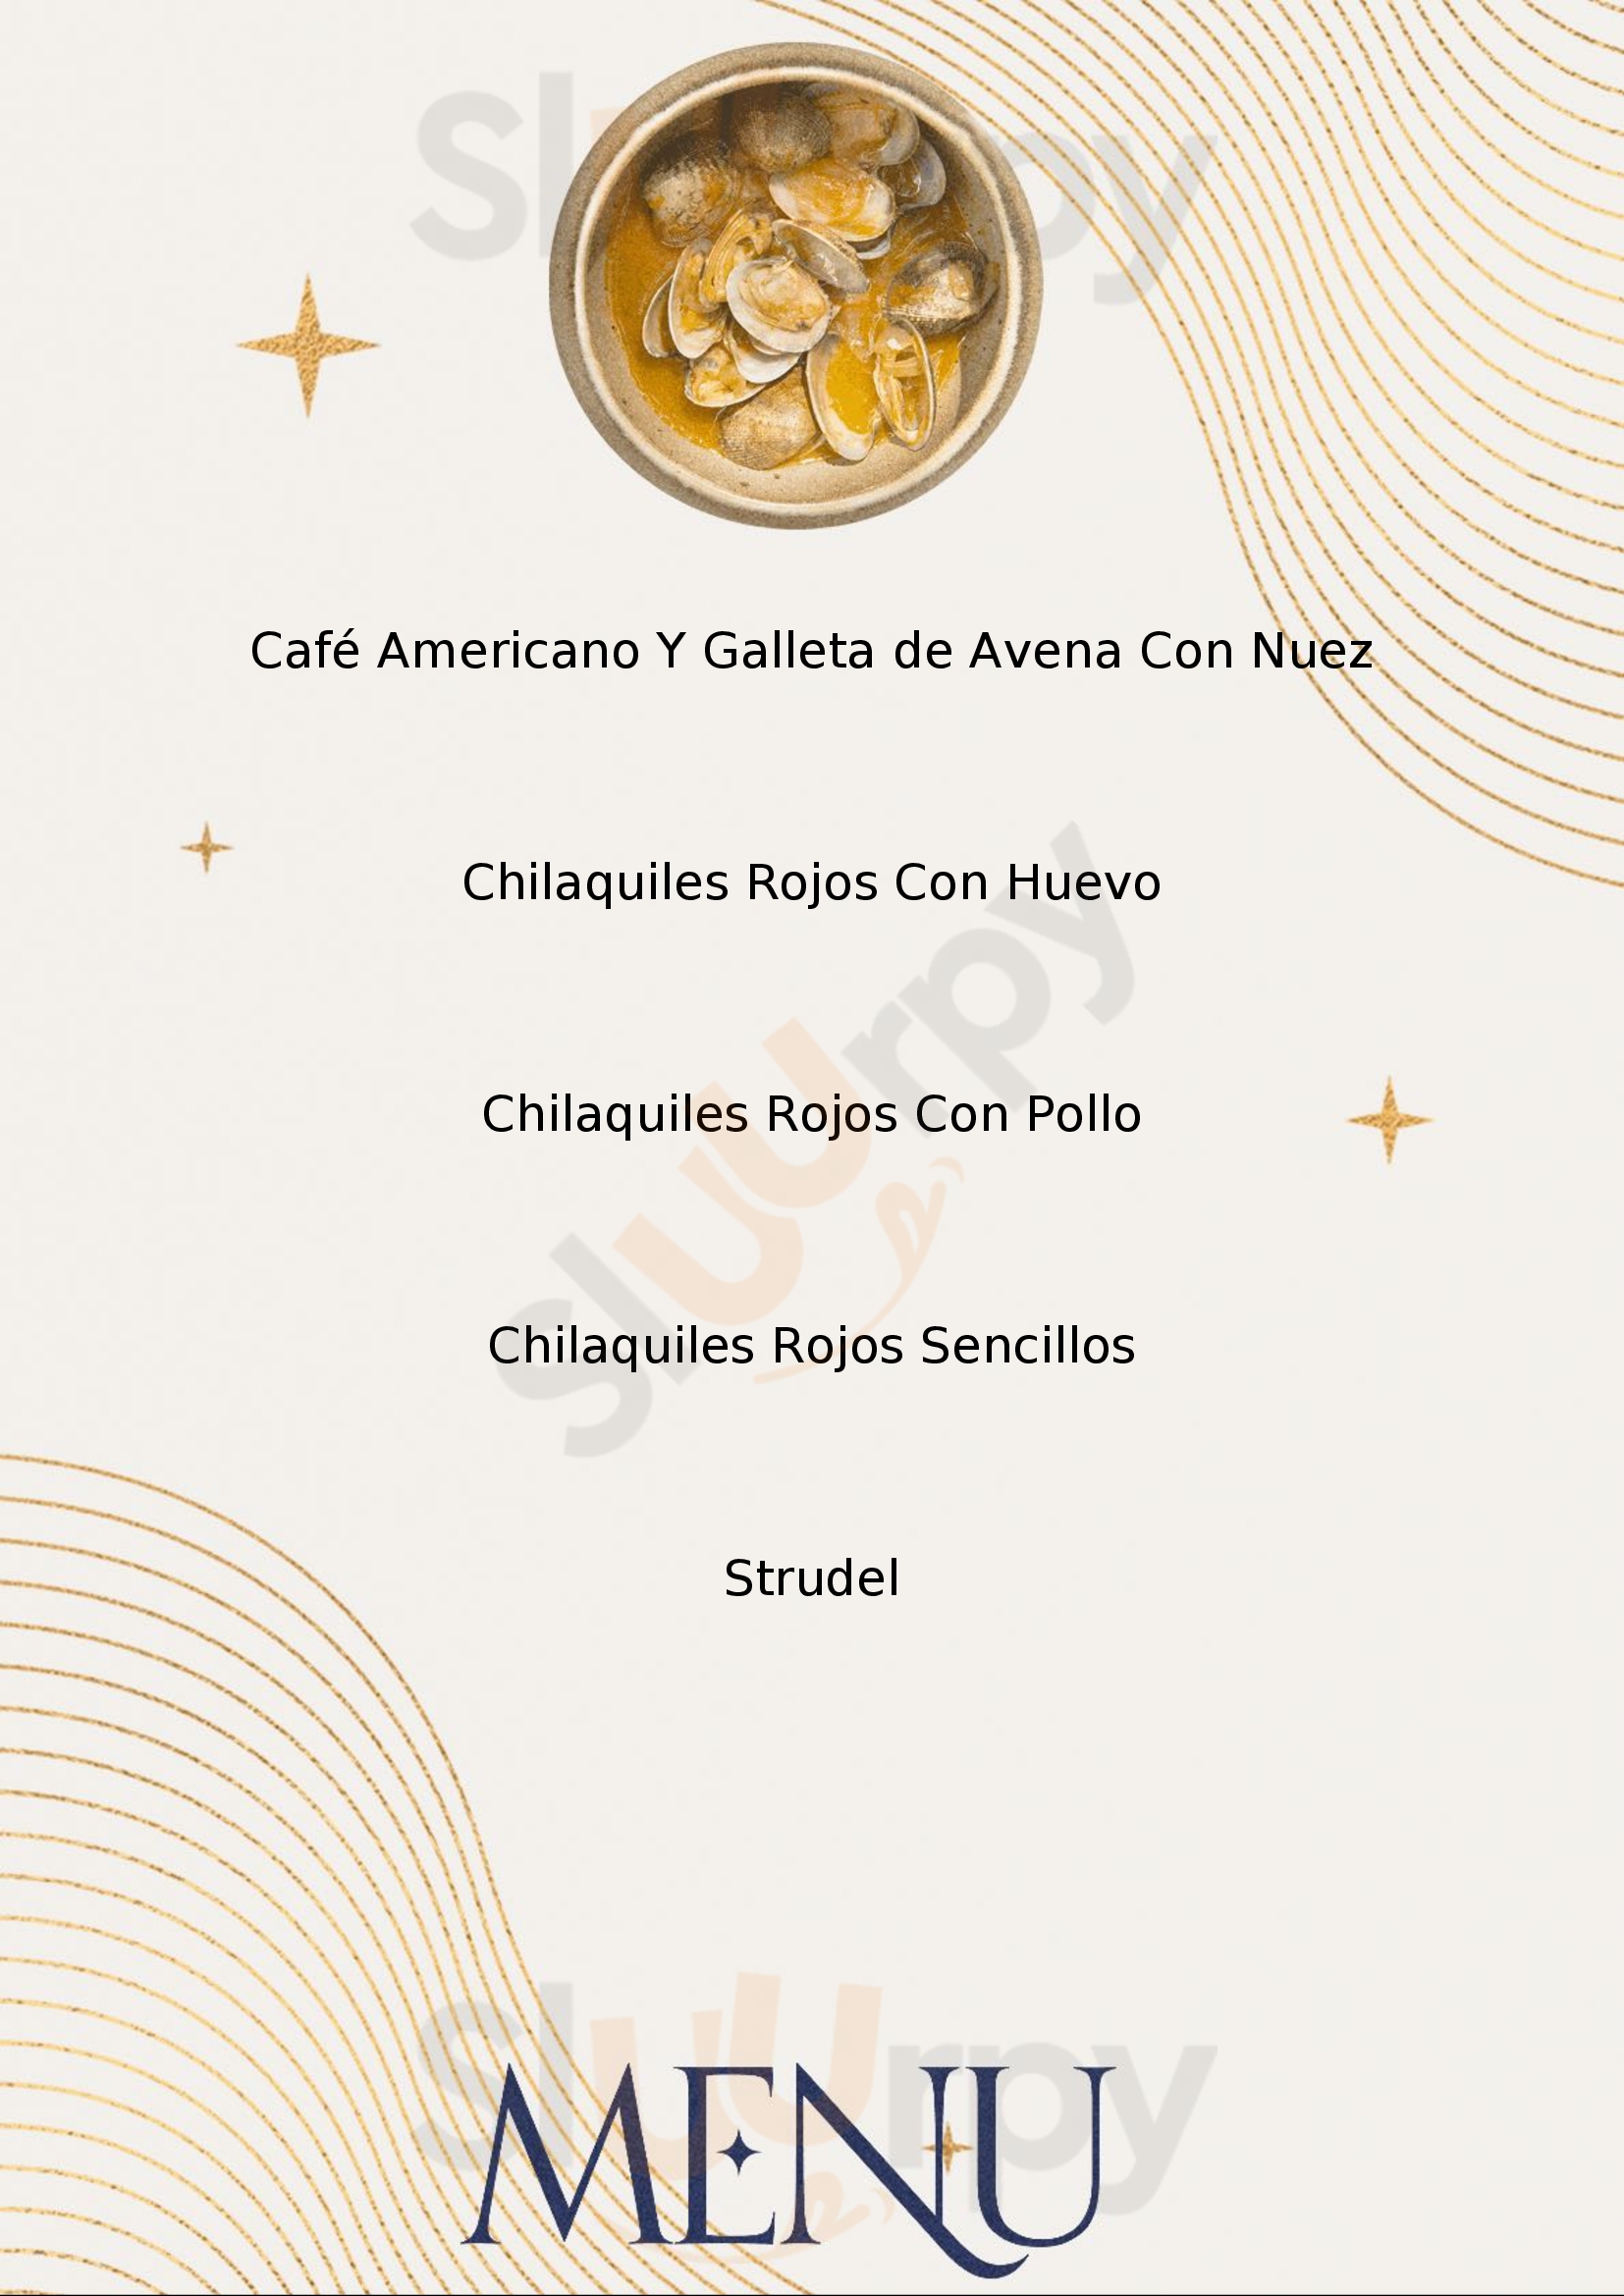 Strudel Cafe La Paz Menu - 1